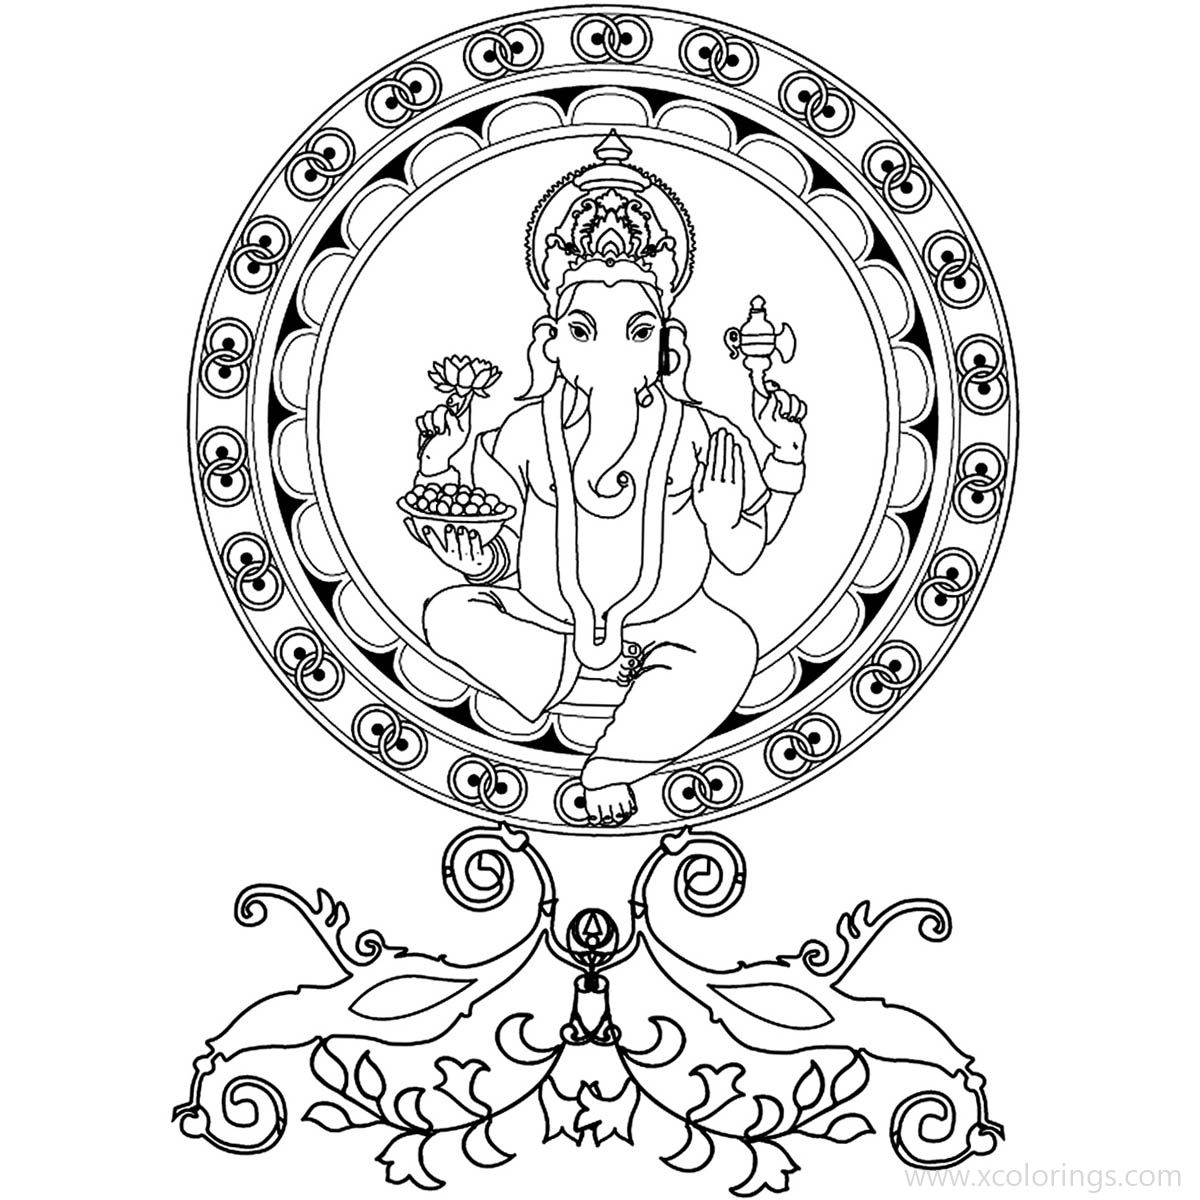 Free Lord Ganesha Coloring Pages printable